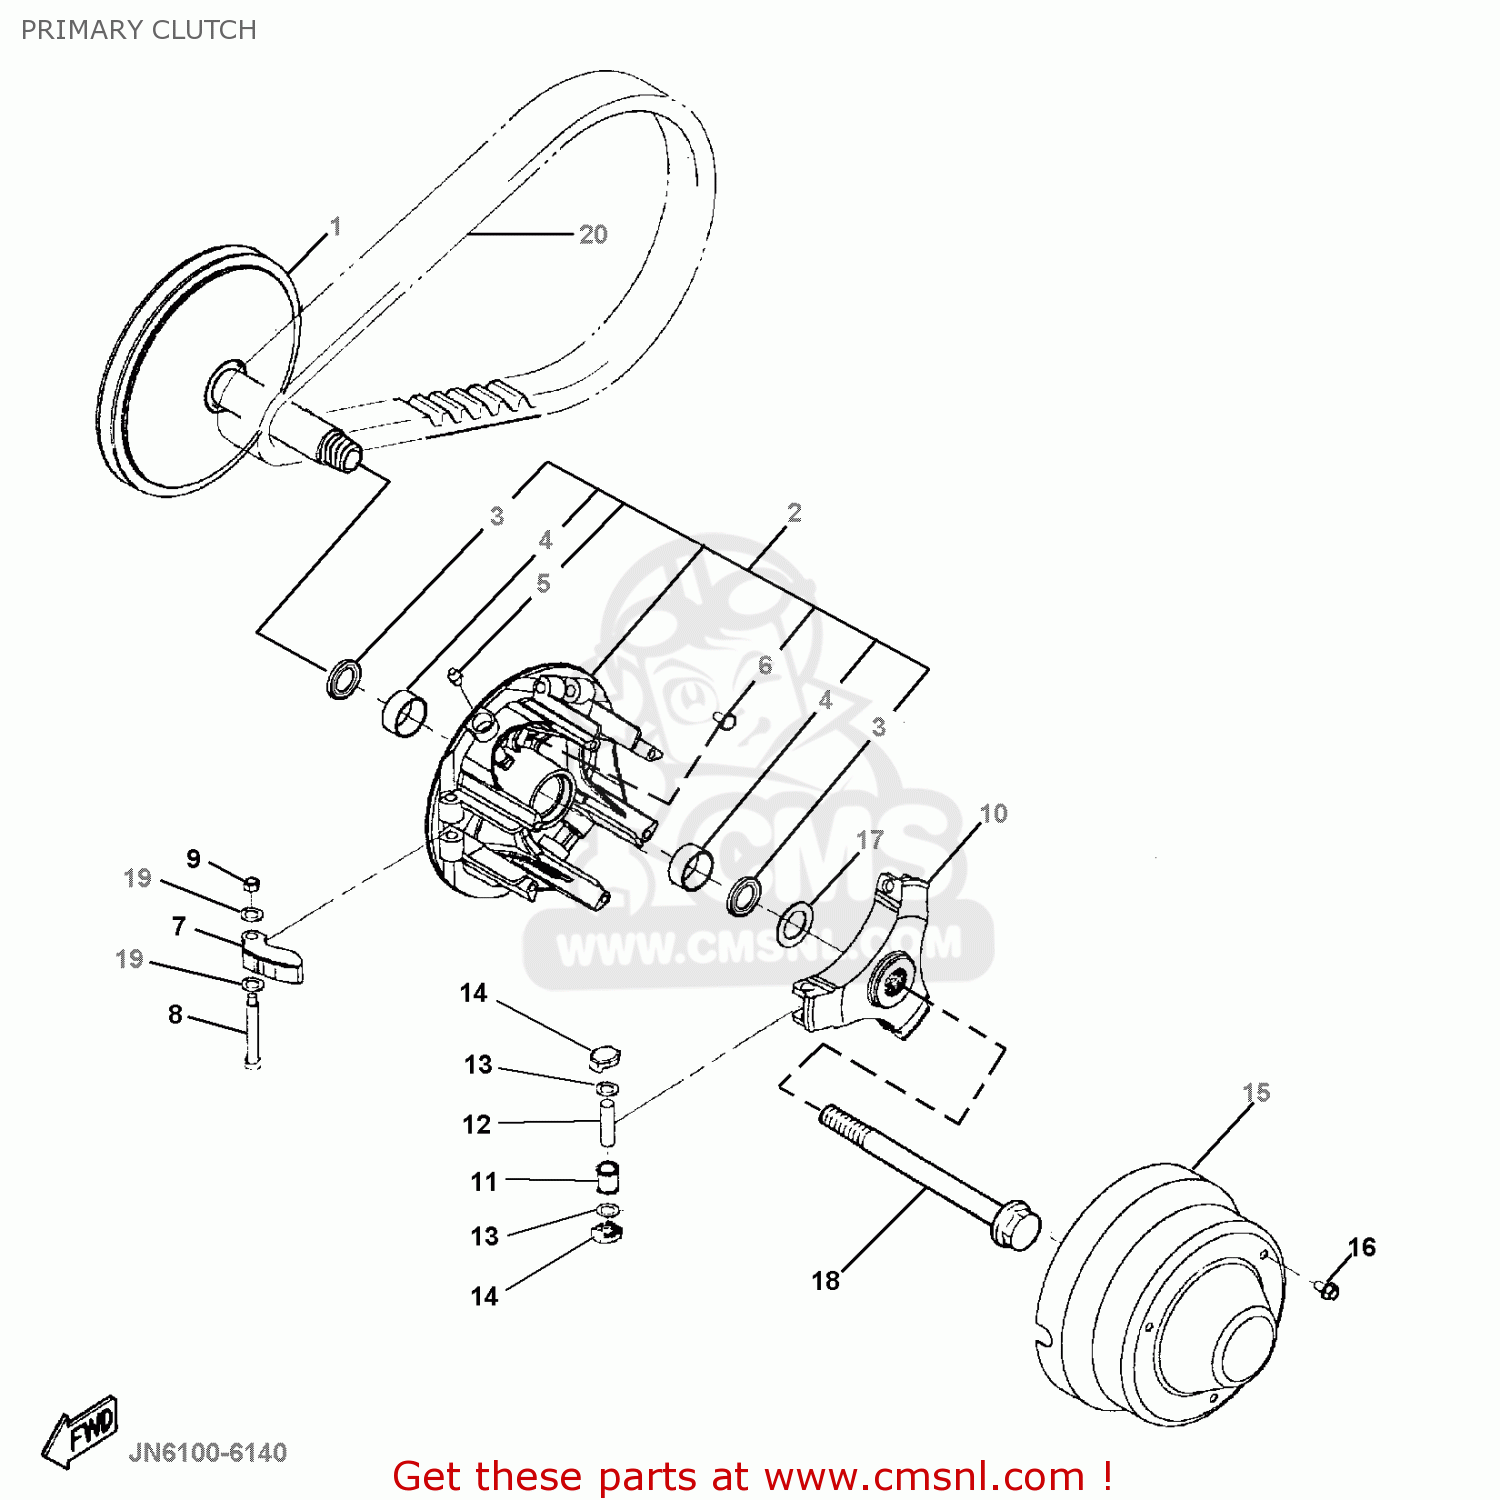 Yamaha G16-ap/ar 1996/1997 Primary Clutch - schematic ... yamaha g16a golf cart wiring diagram 